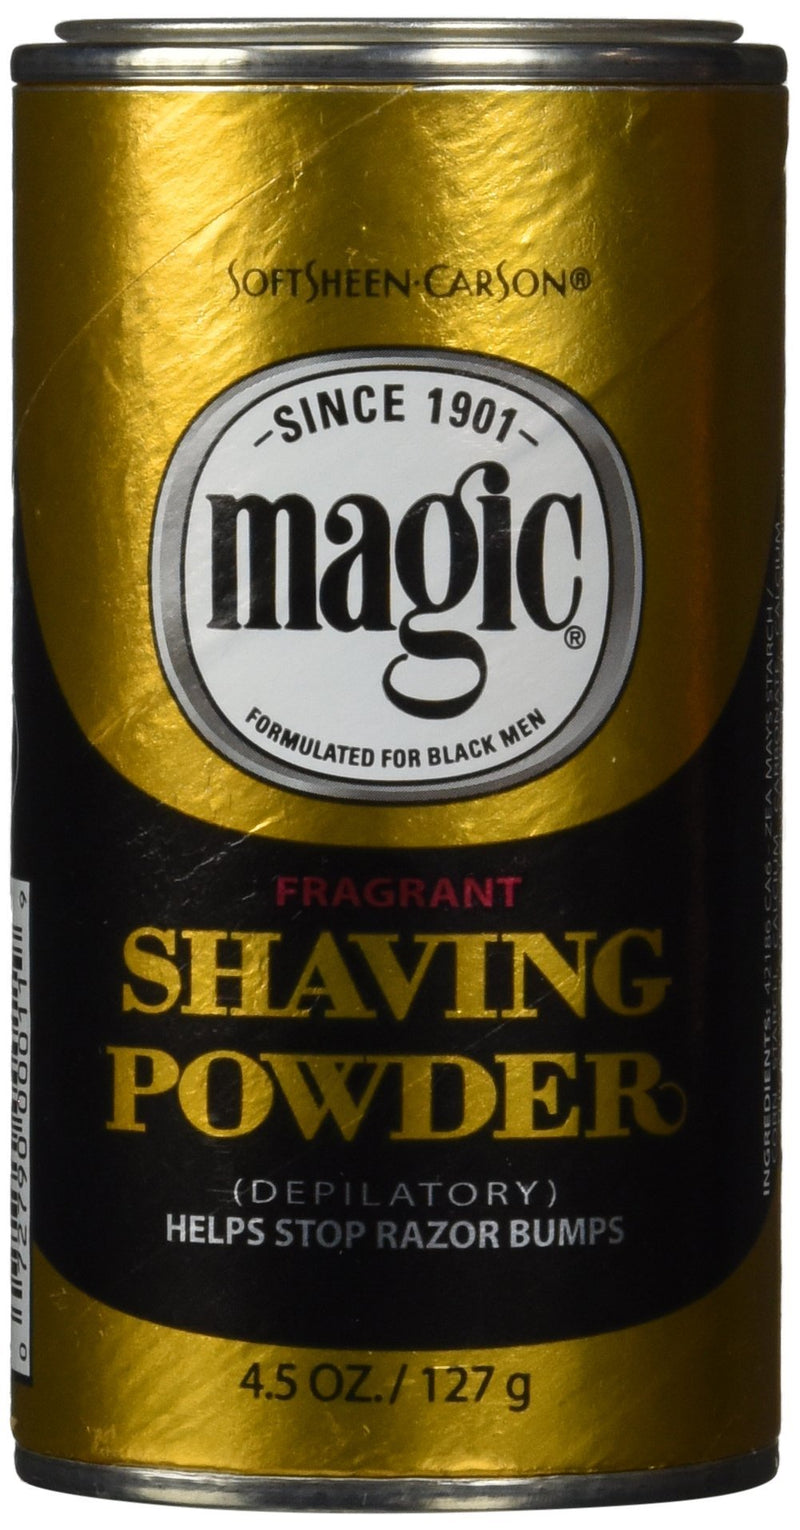 [Australia] - Softsheen-Carson Magic Razorless Shaving for Men, Magic Shaving Powder with Fragrance, Coarse Textured Beards, Formulated for Black Men, Depilatory, Helps Stop Razor Bumps, Since 1901, 4.5 oz Fragrant 